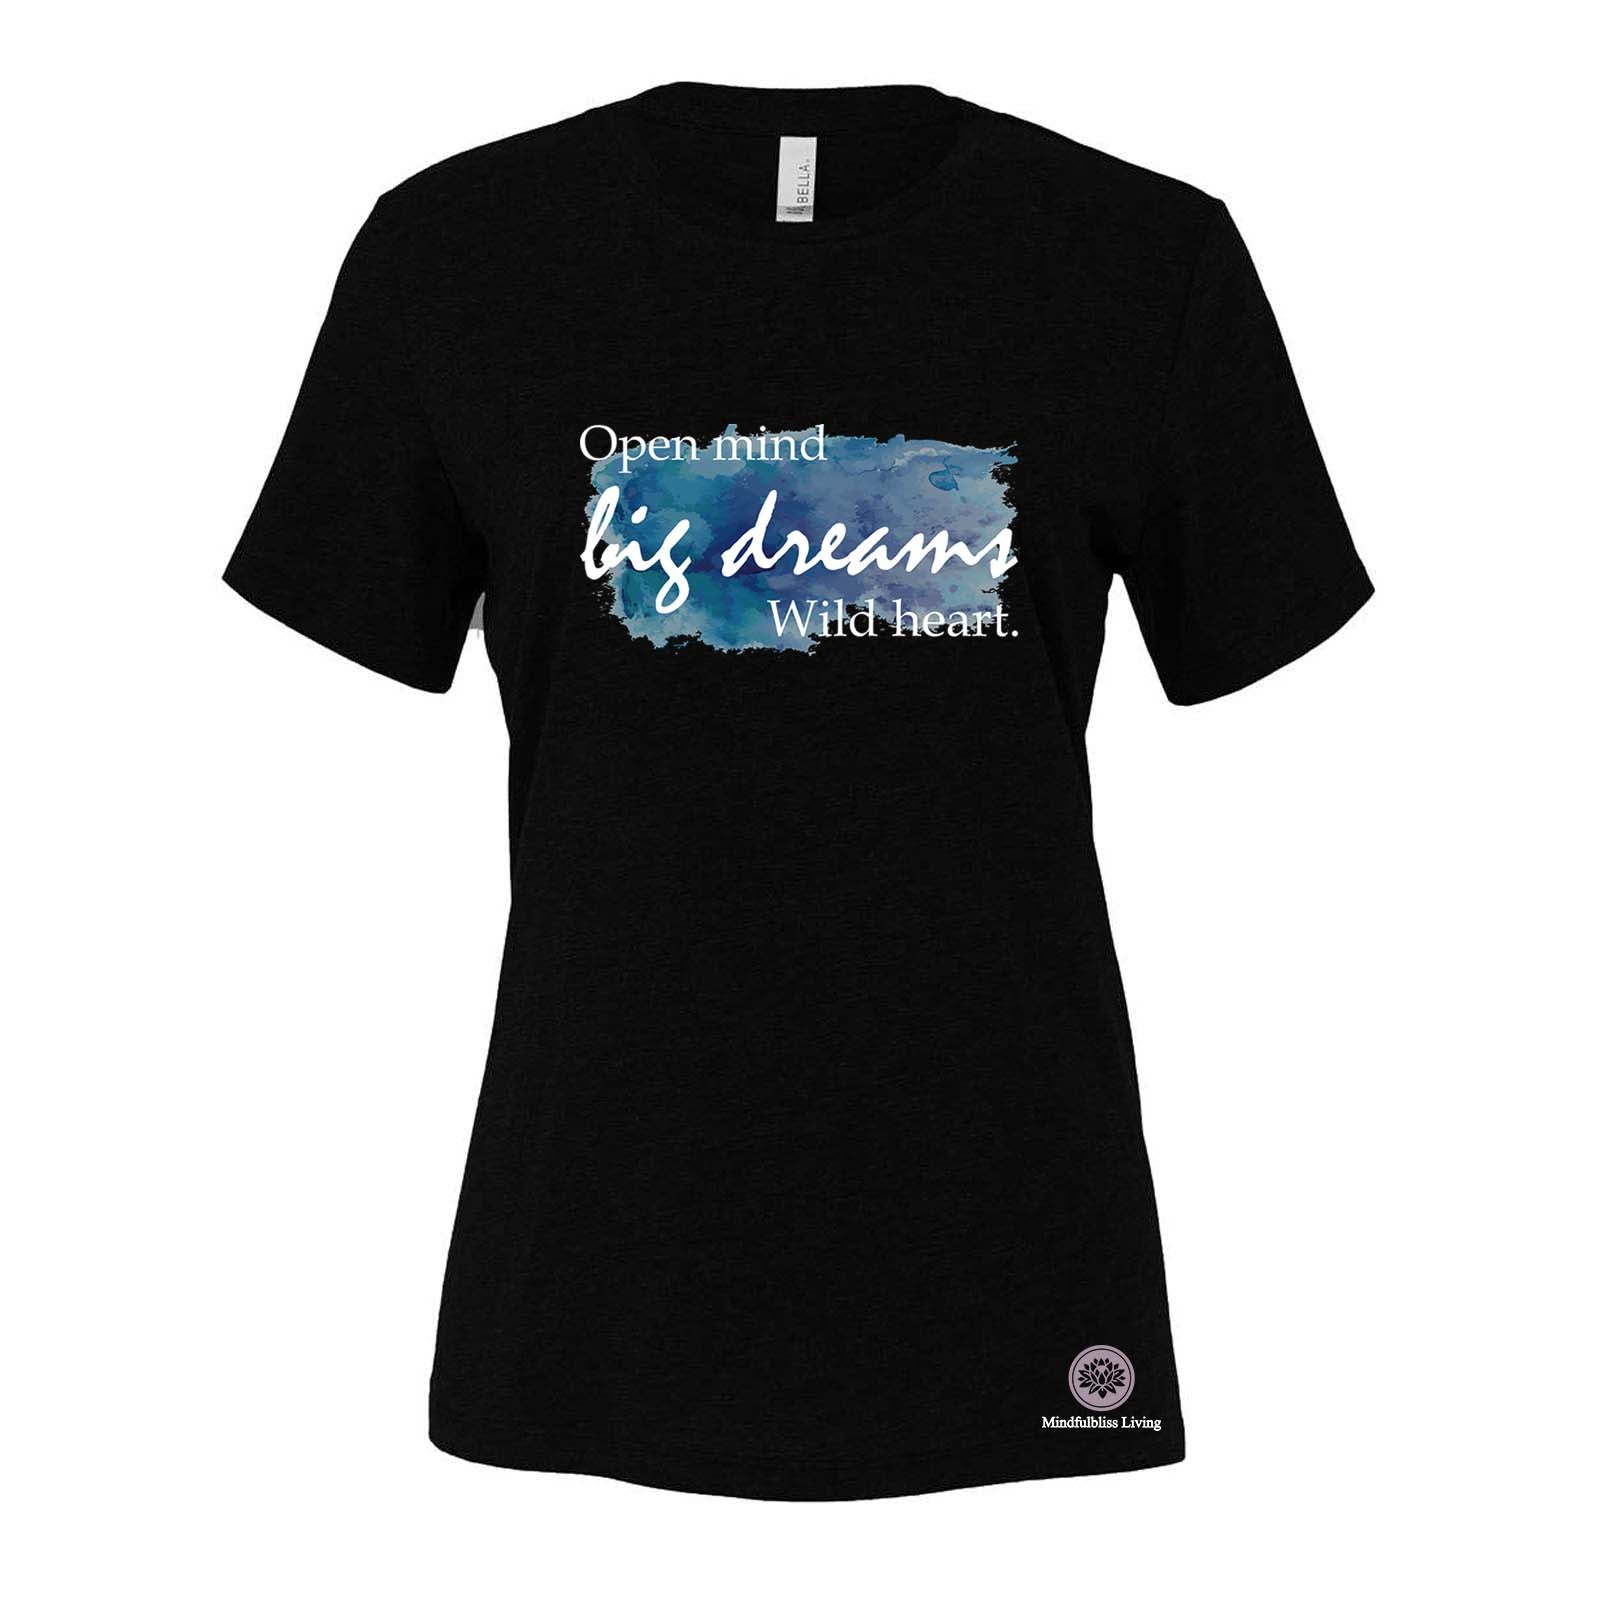 Mindfulbliss Living Big Dreams Bella + Canvas Women's Cotton/Polyester Blend T-Shirt - Mato & Hash